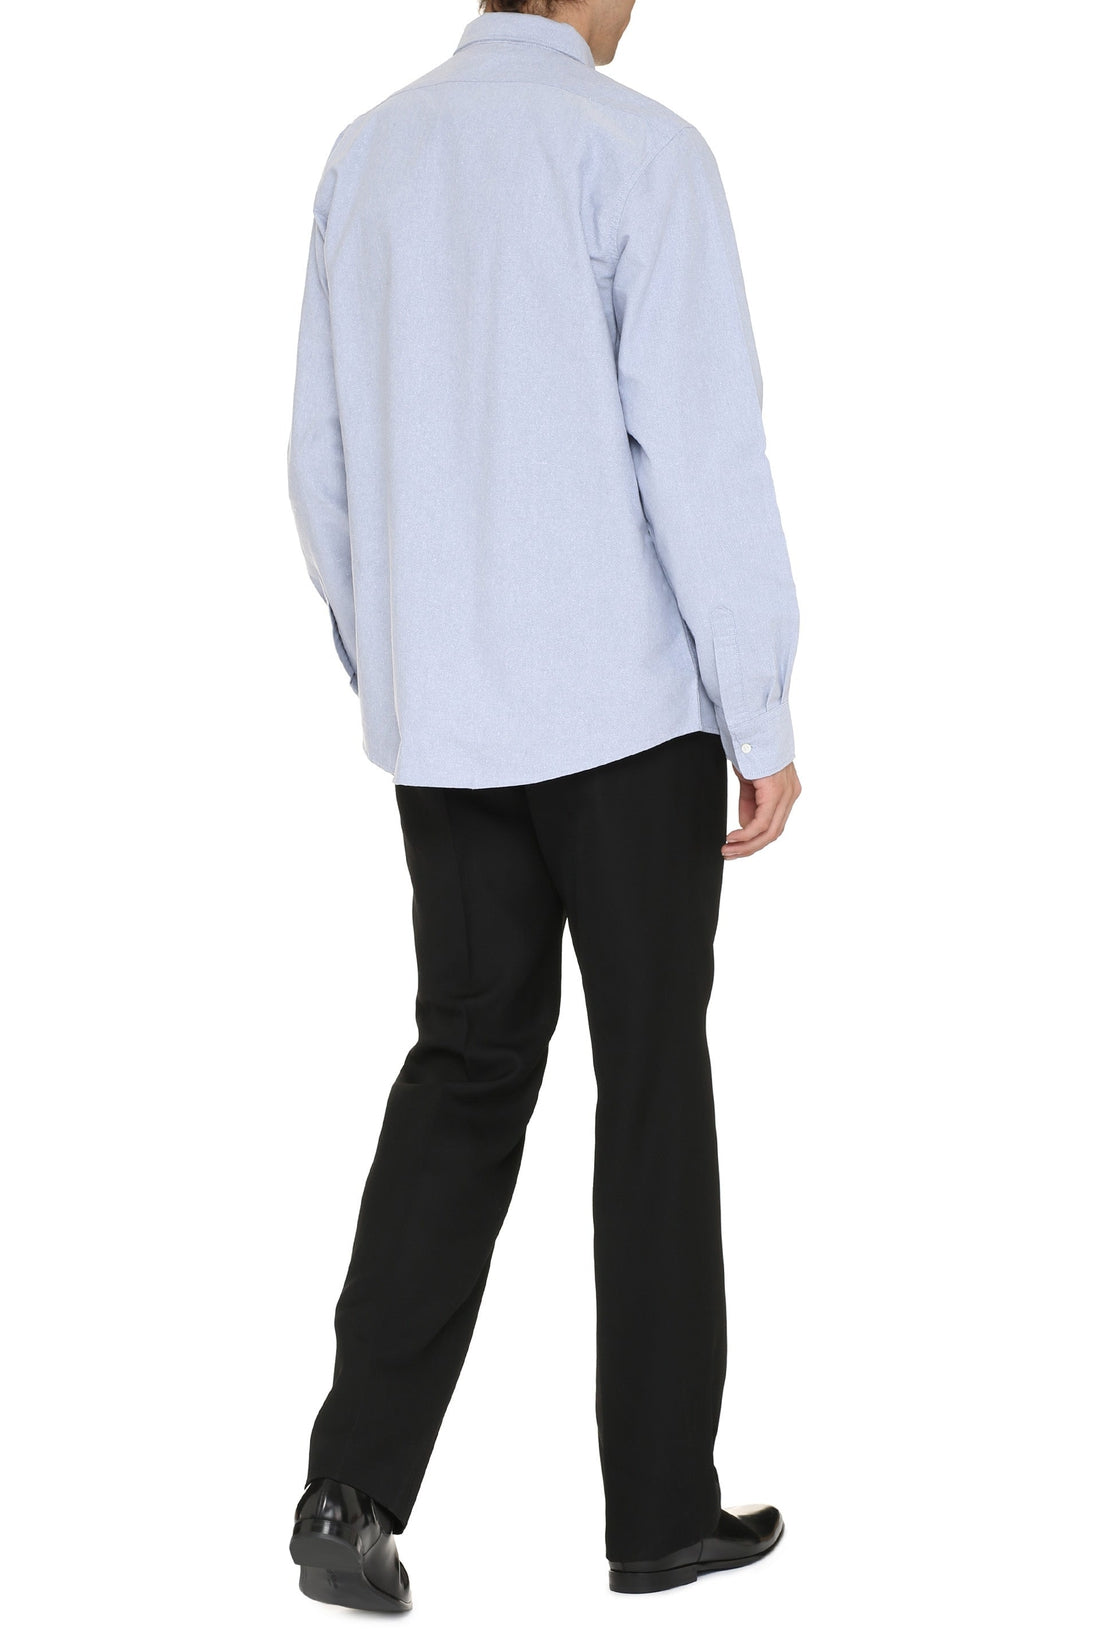 Aspesi-OUTLET-SALE-Sterling Oxford cotton shirt-ARCHIVIST